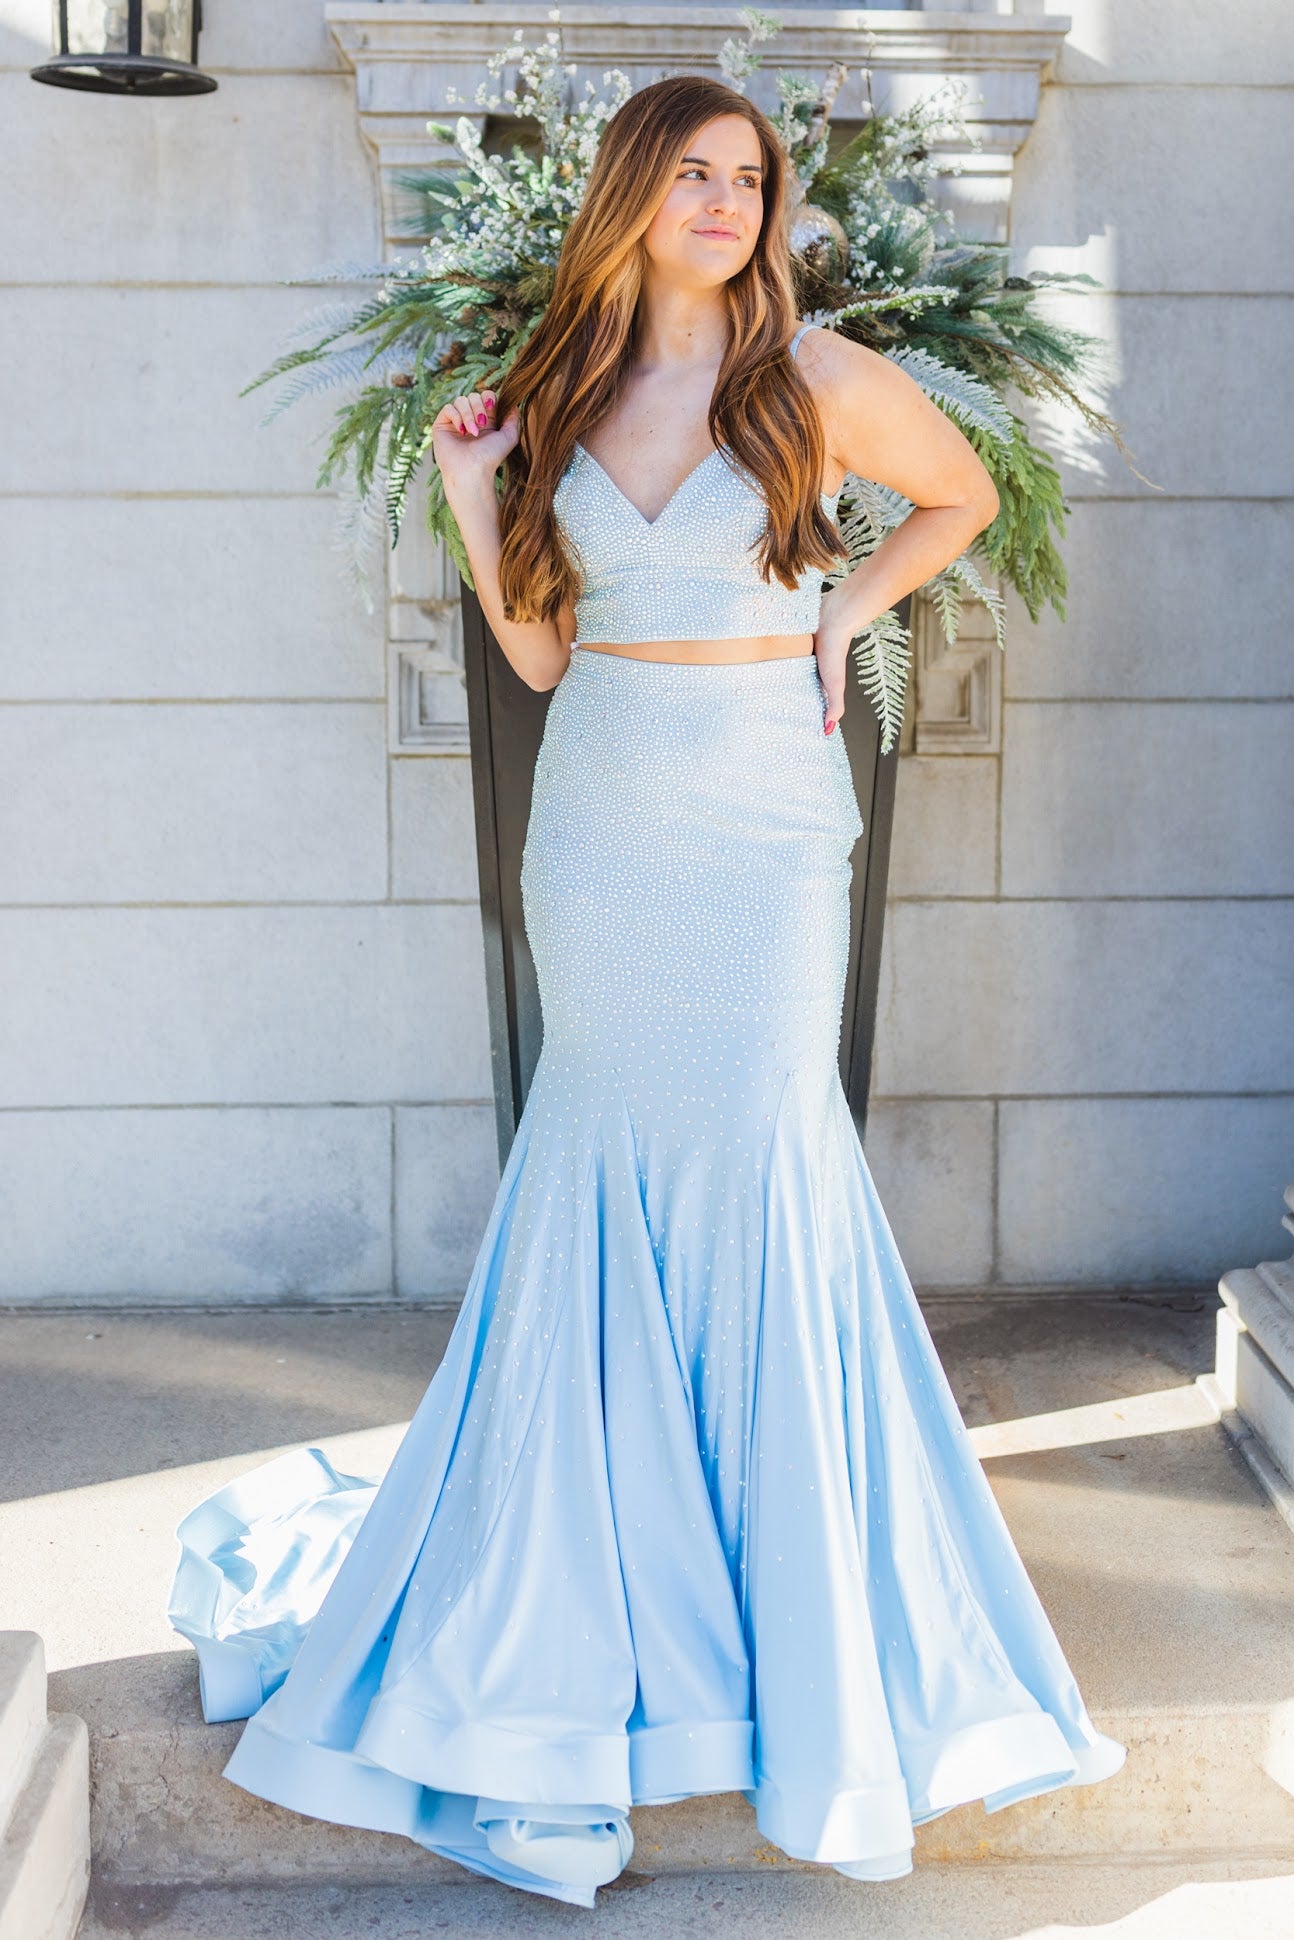 Prom Dress 61188 Glacier Blue